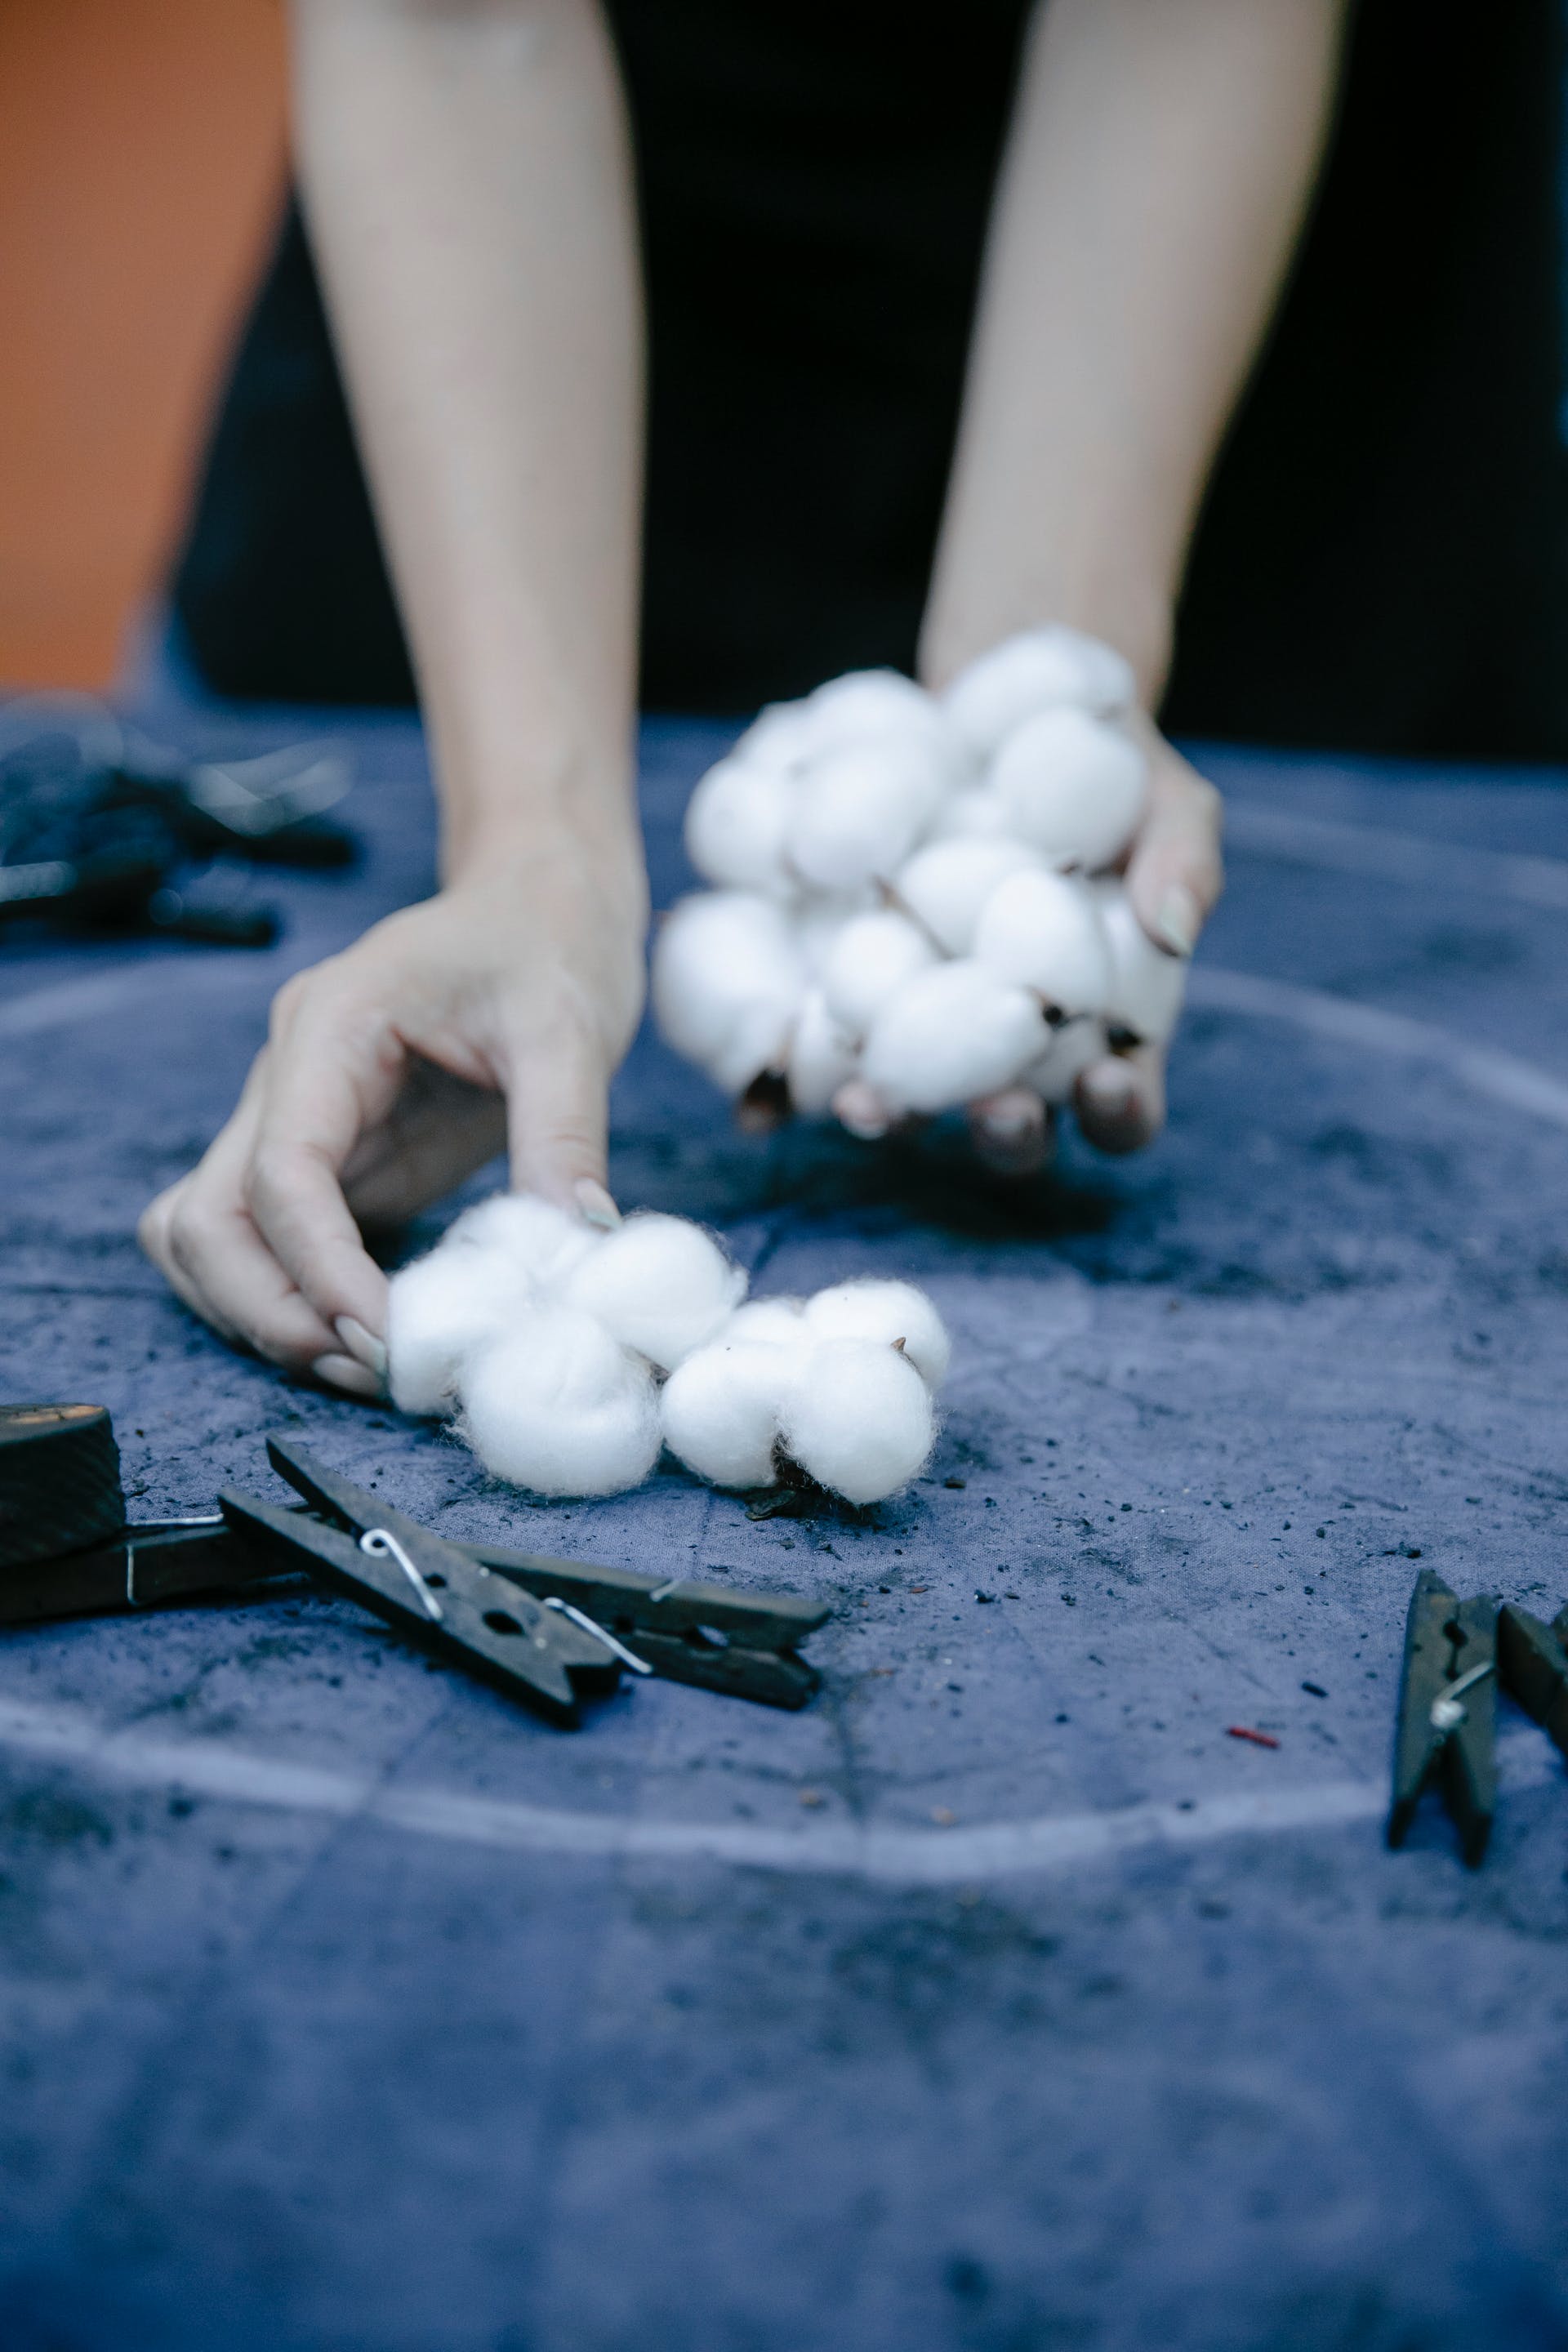 A person holding cotton balls | Source: Pexels